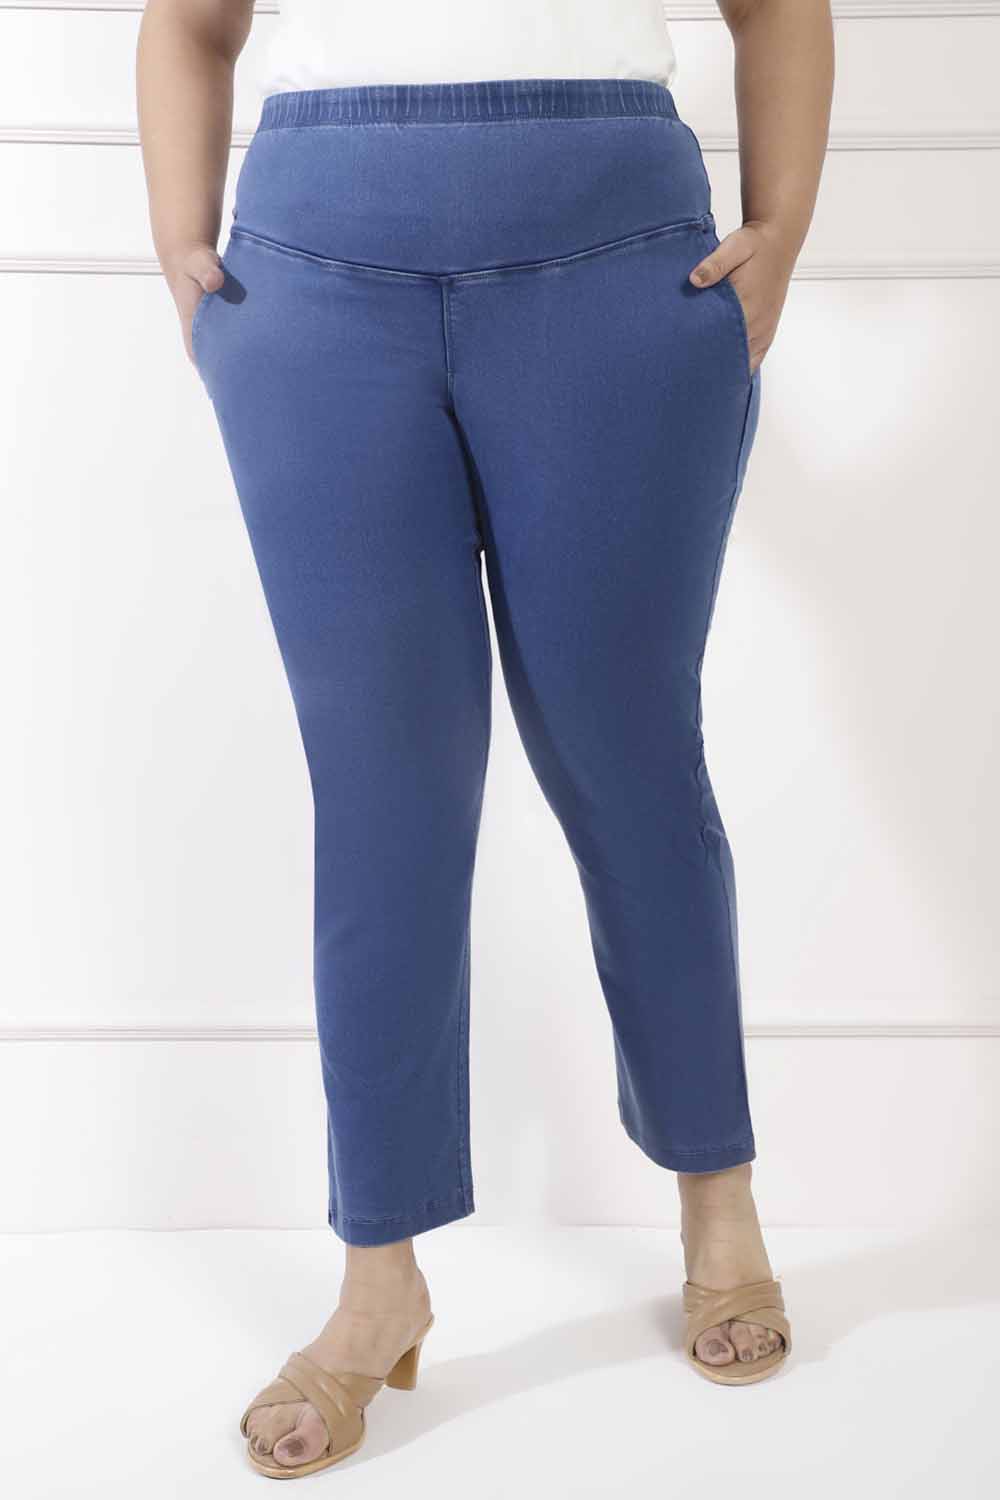 Buy Plus Size Denim Blue Crease Seam Tummy Tucker Pants Online For Women